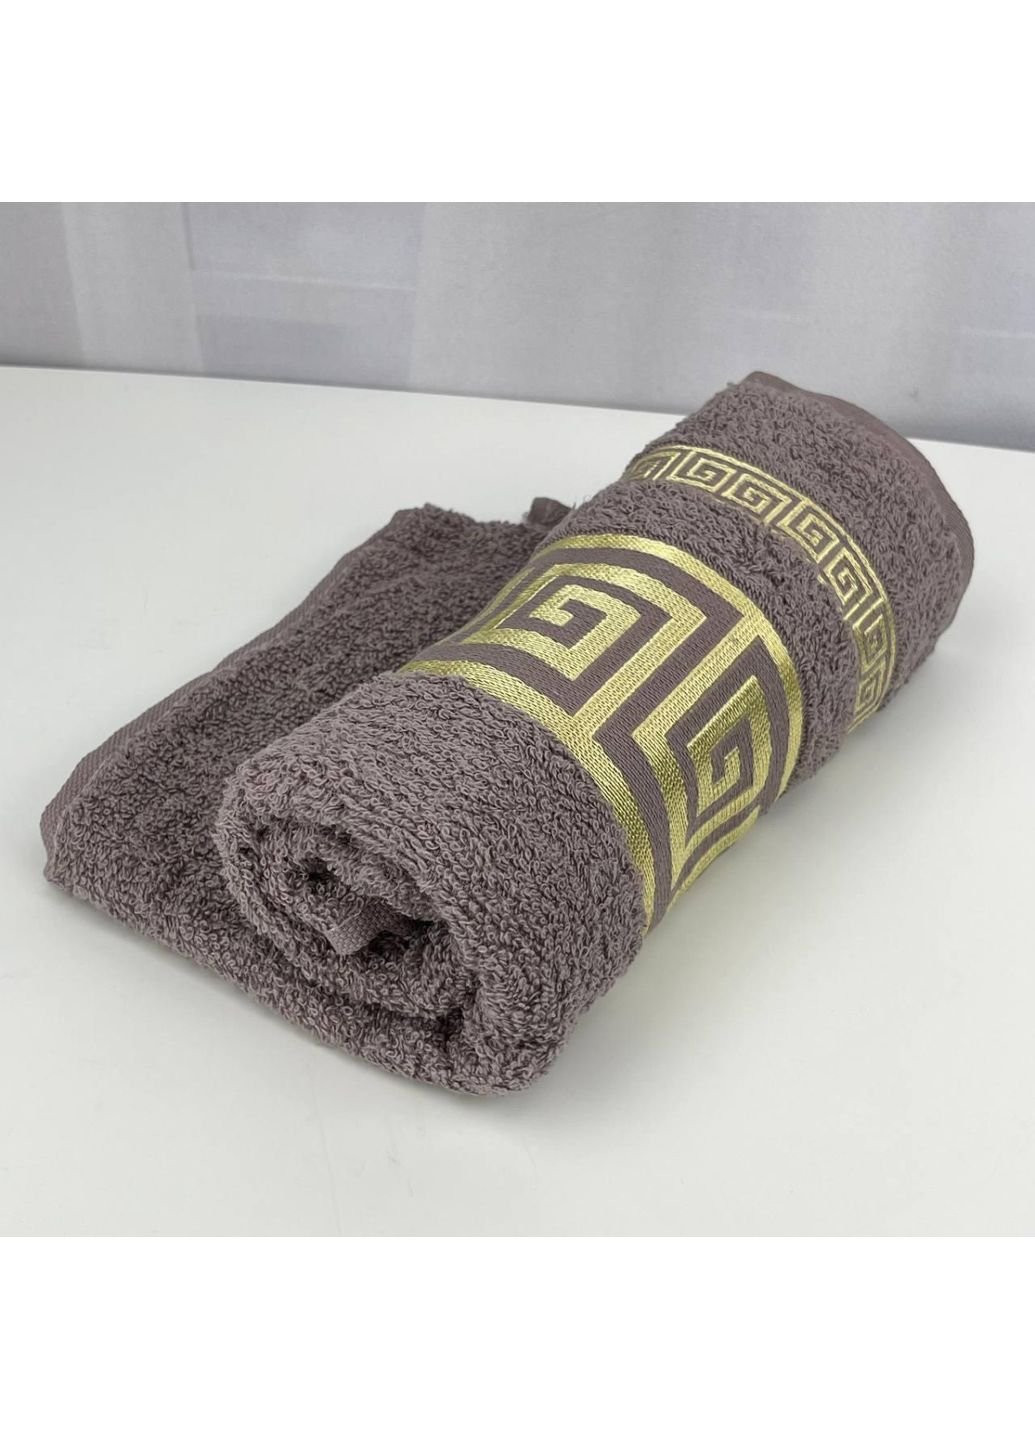 No Brand полотенце для лица махровое febo vip cotton grek турция 6385 капучино 50х90 см комбинированный производство - Украина